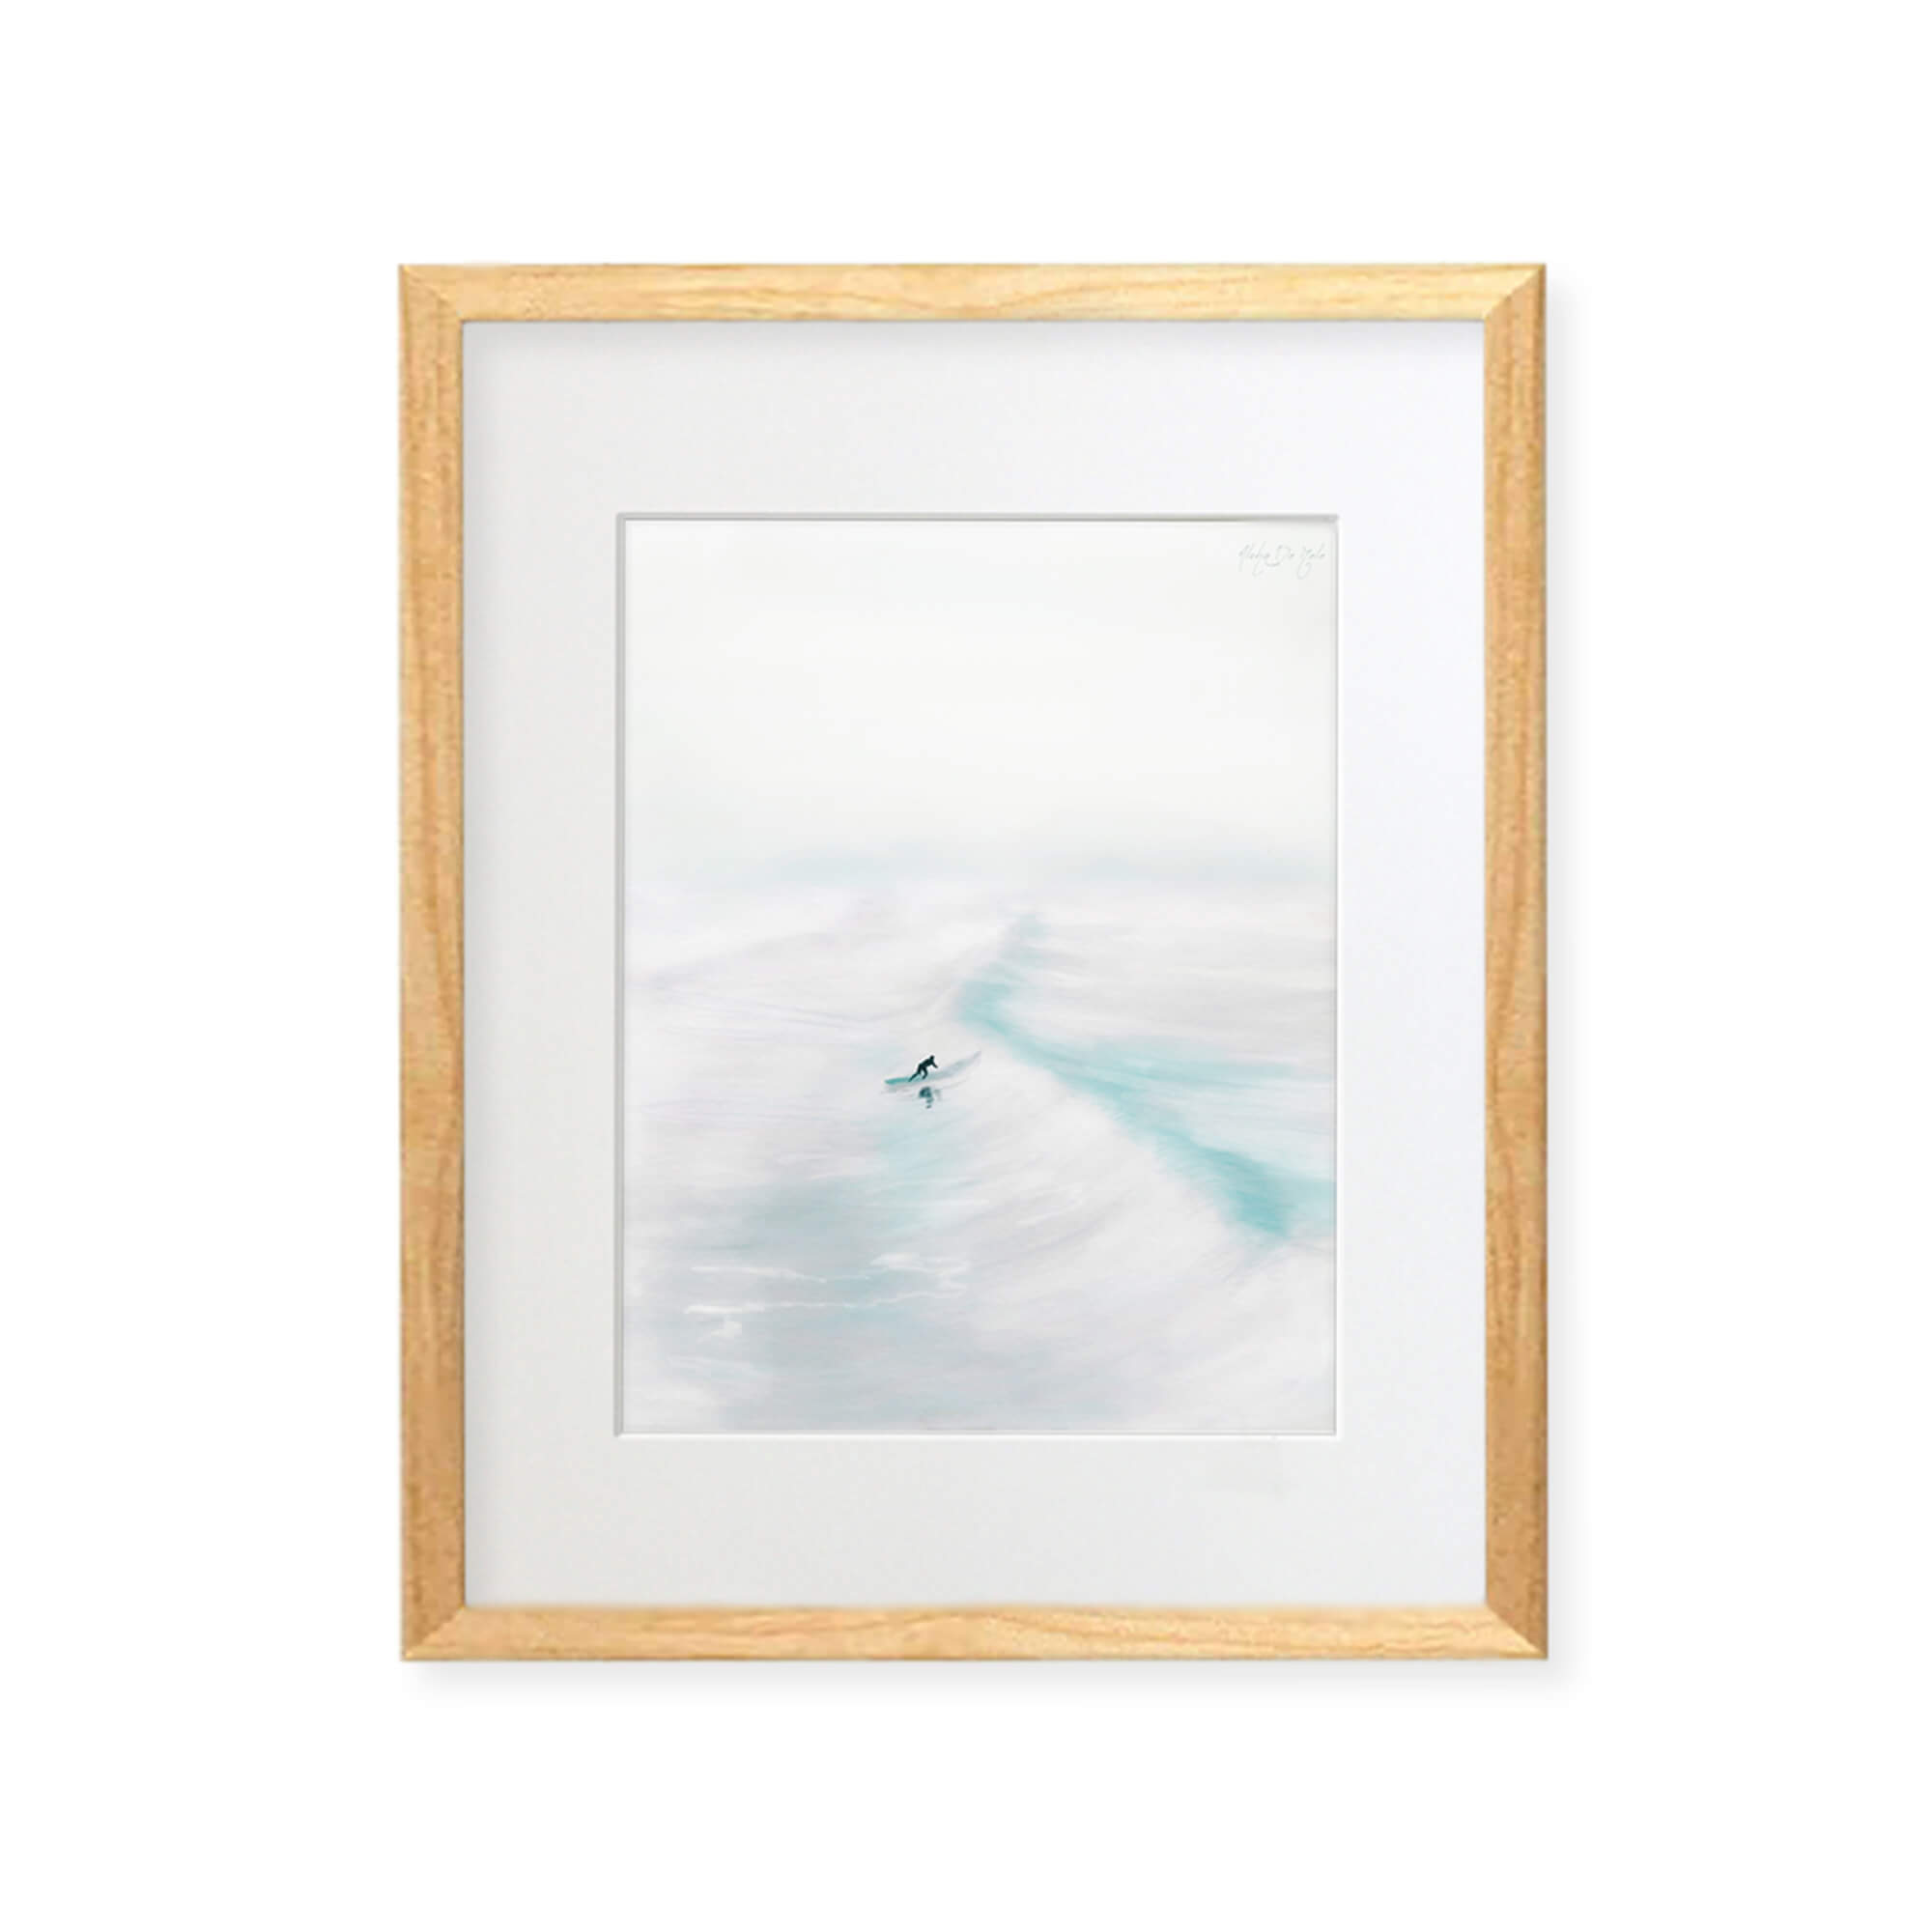 A framed matted art print of a surfer riding the epic waves of Hawaii by Hawaii artist Aloha De Mele